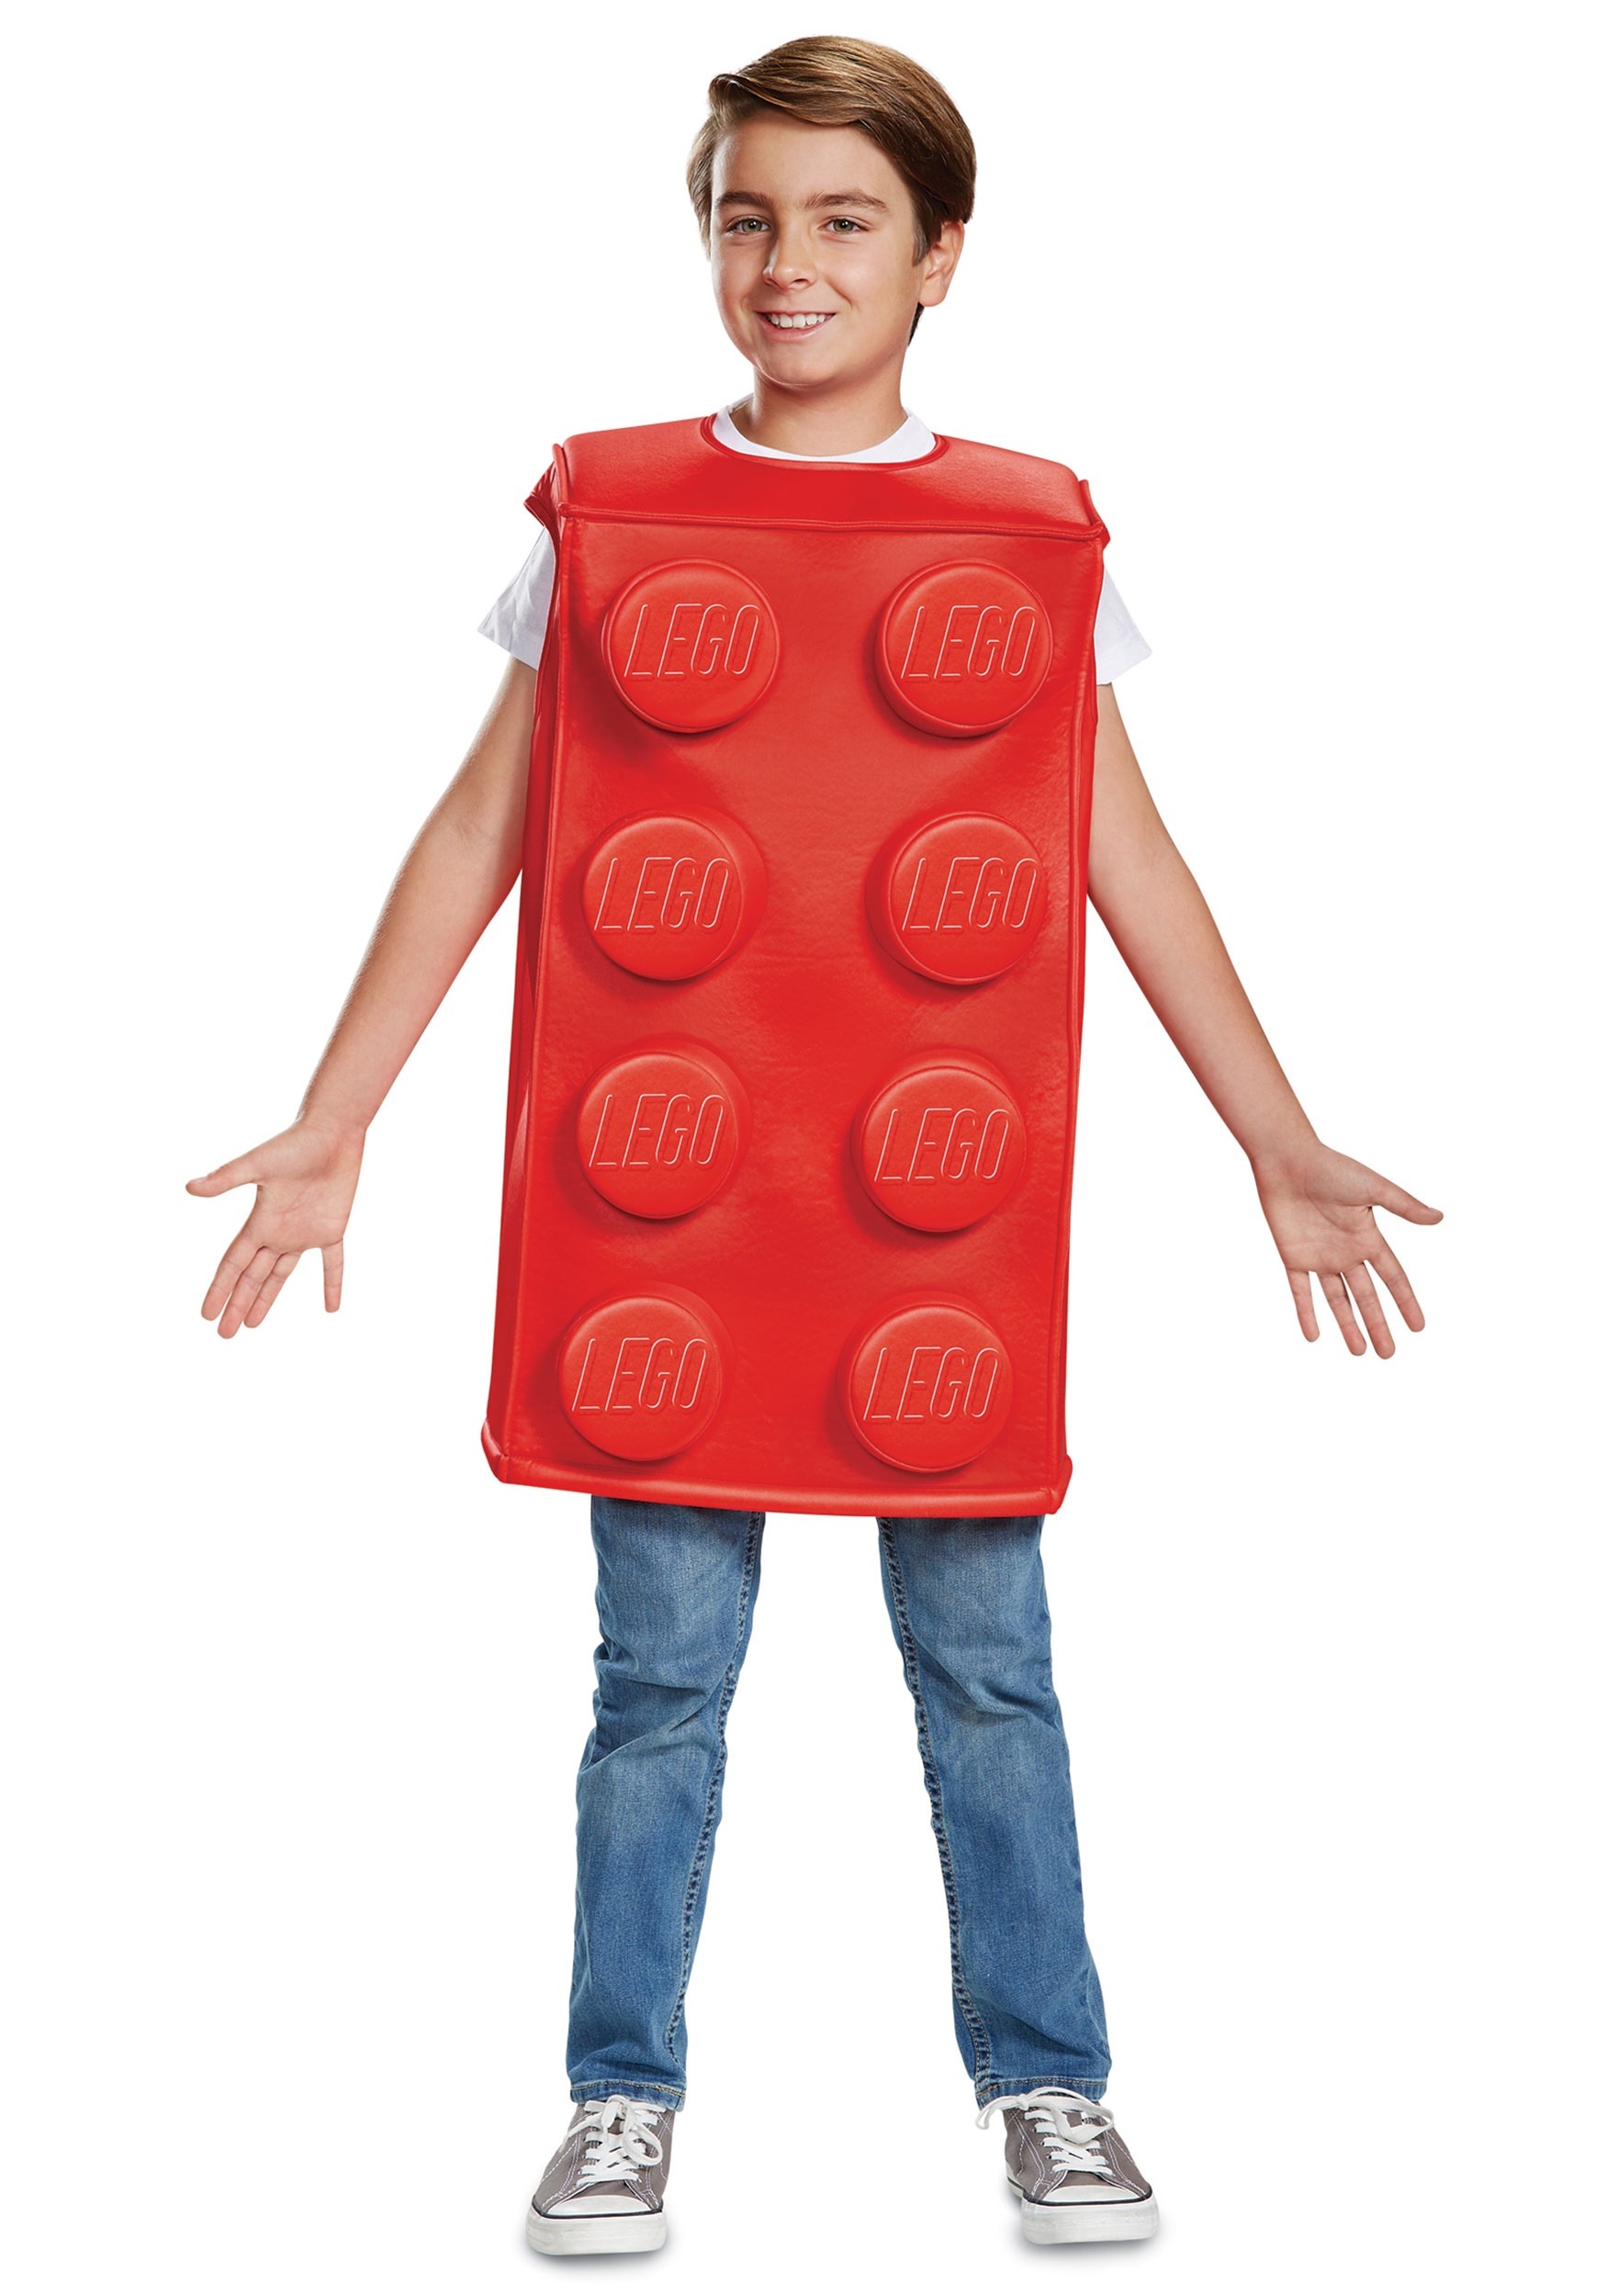 Lego Kids Red Brick Costume